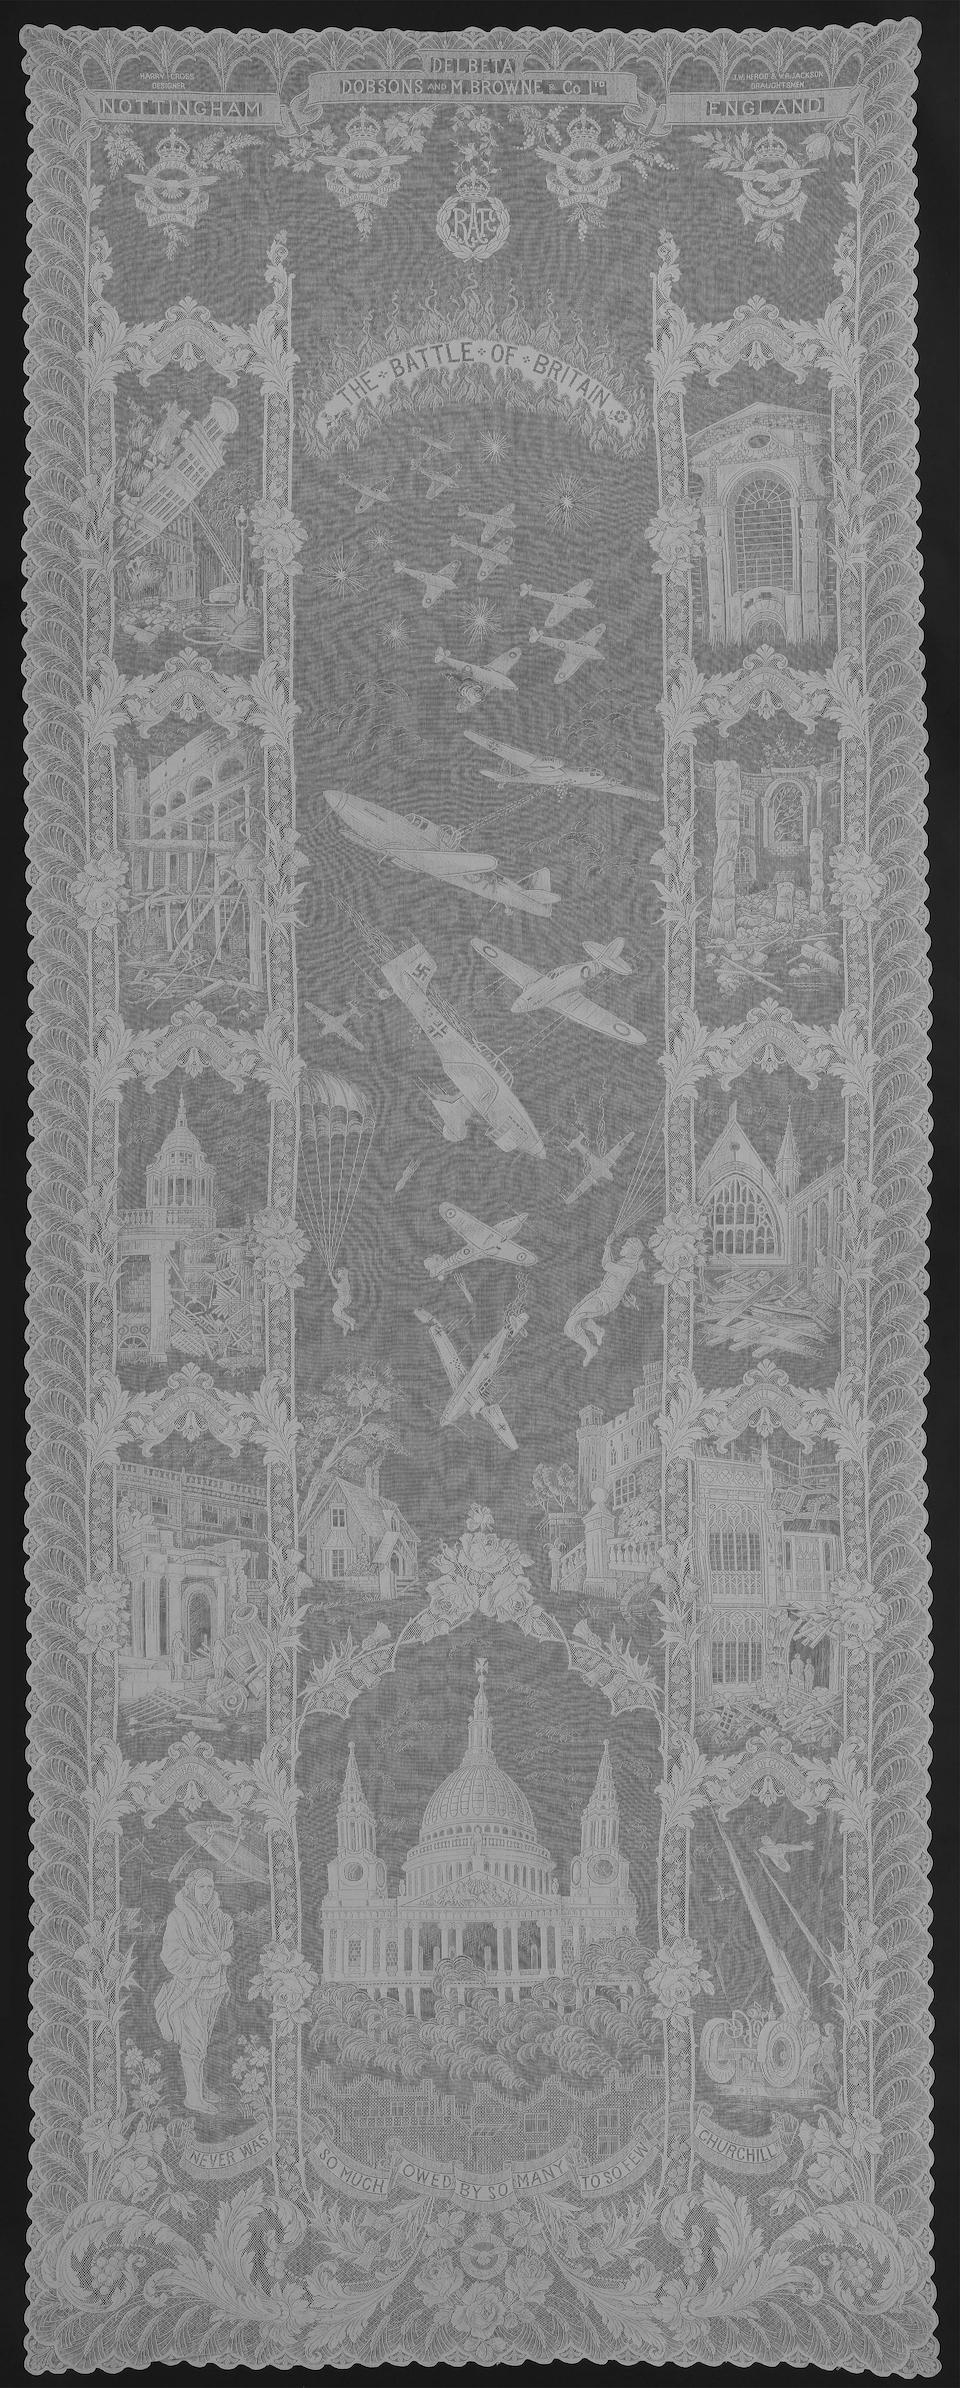 A Battle of Britain lace panel, 1942-46